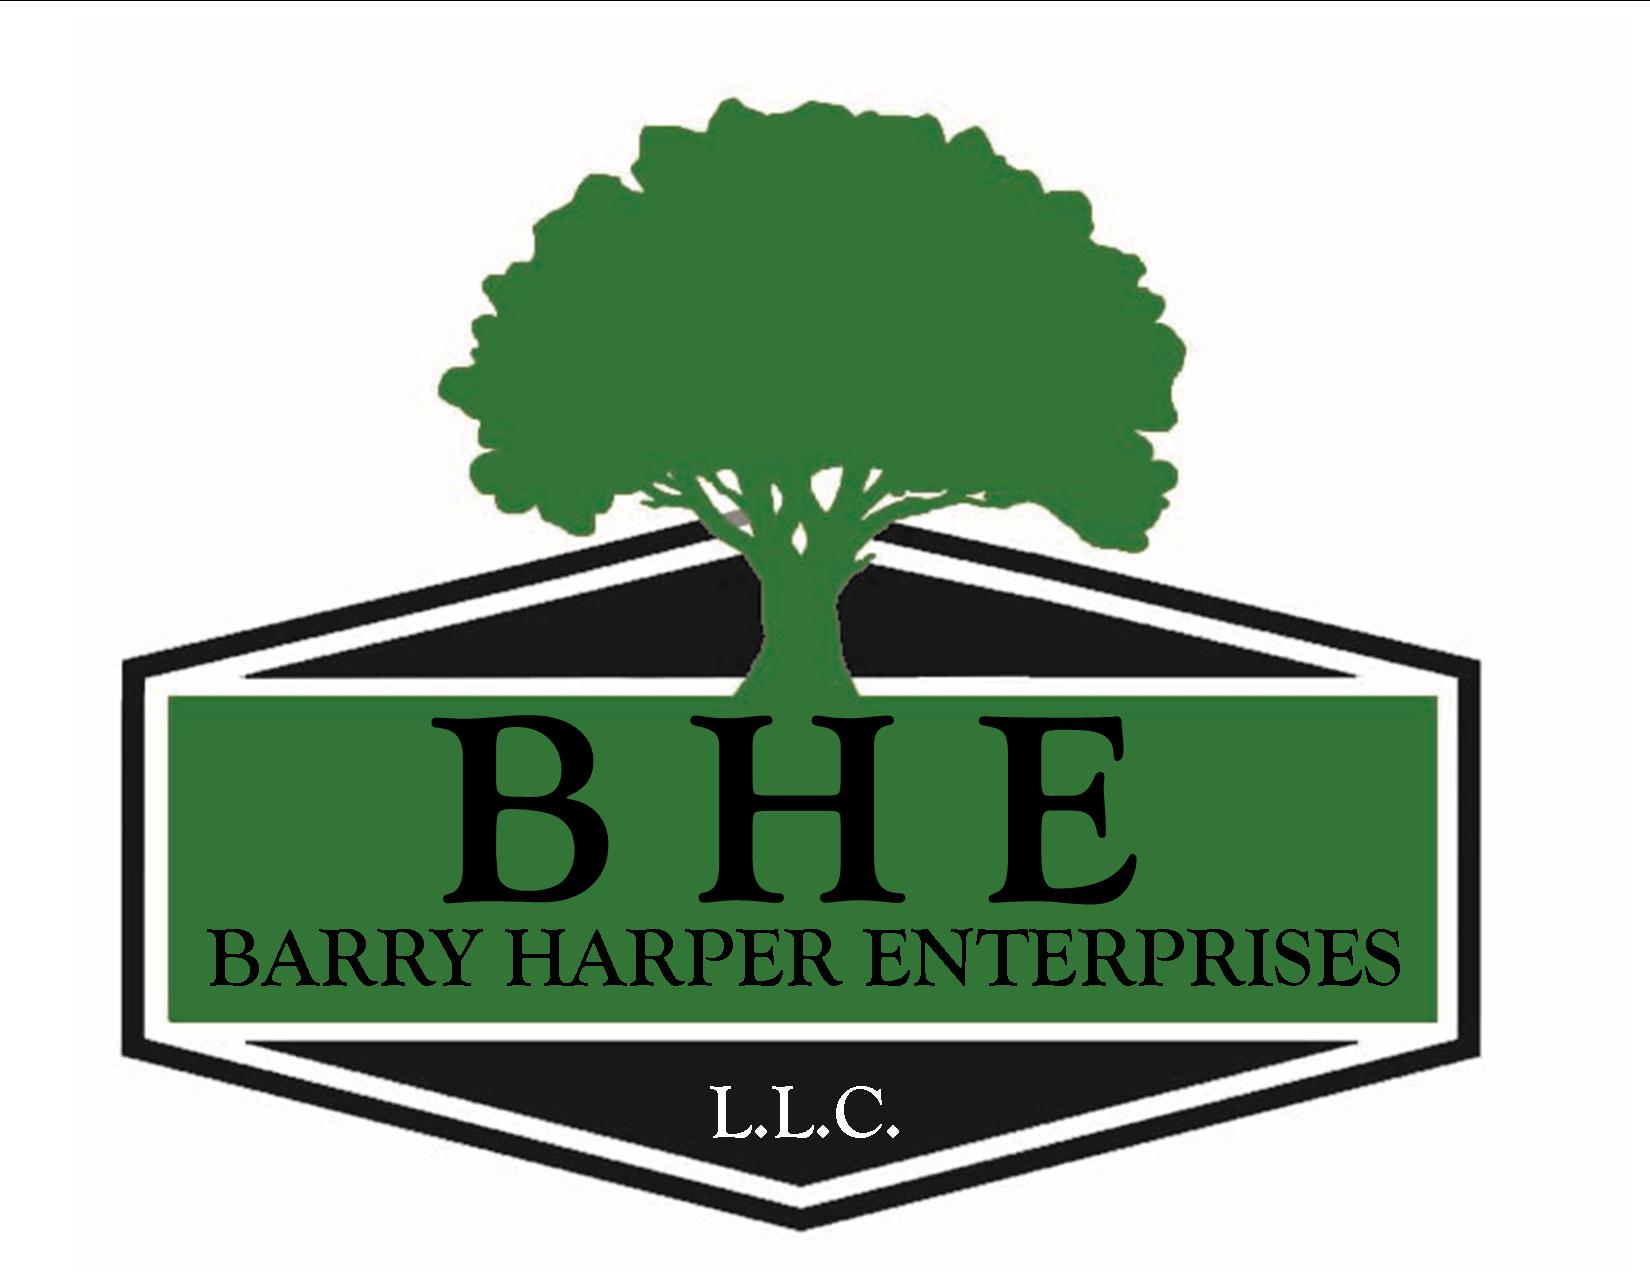 Barry Harper Enterprises LLC